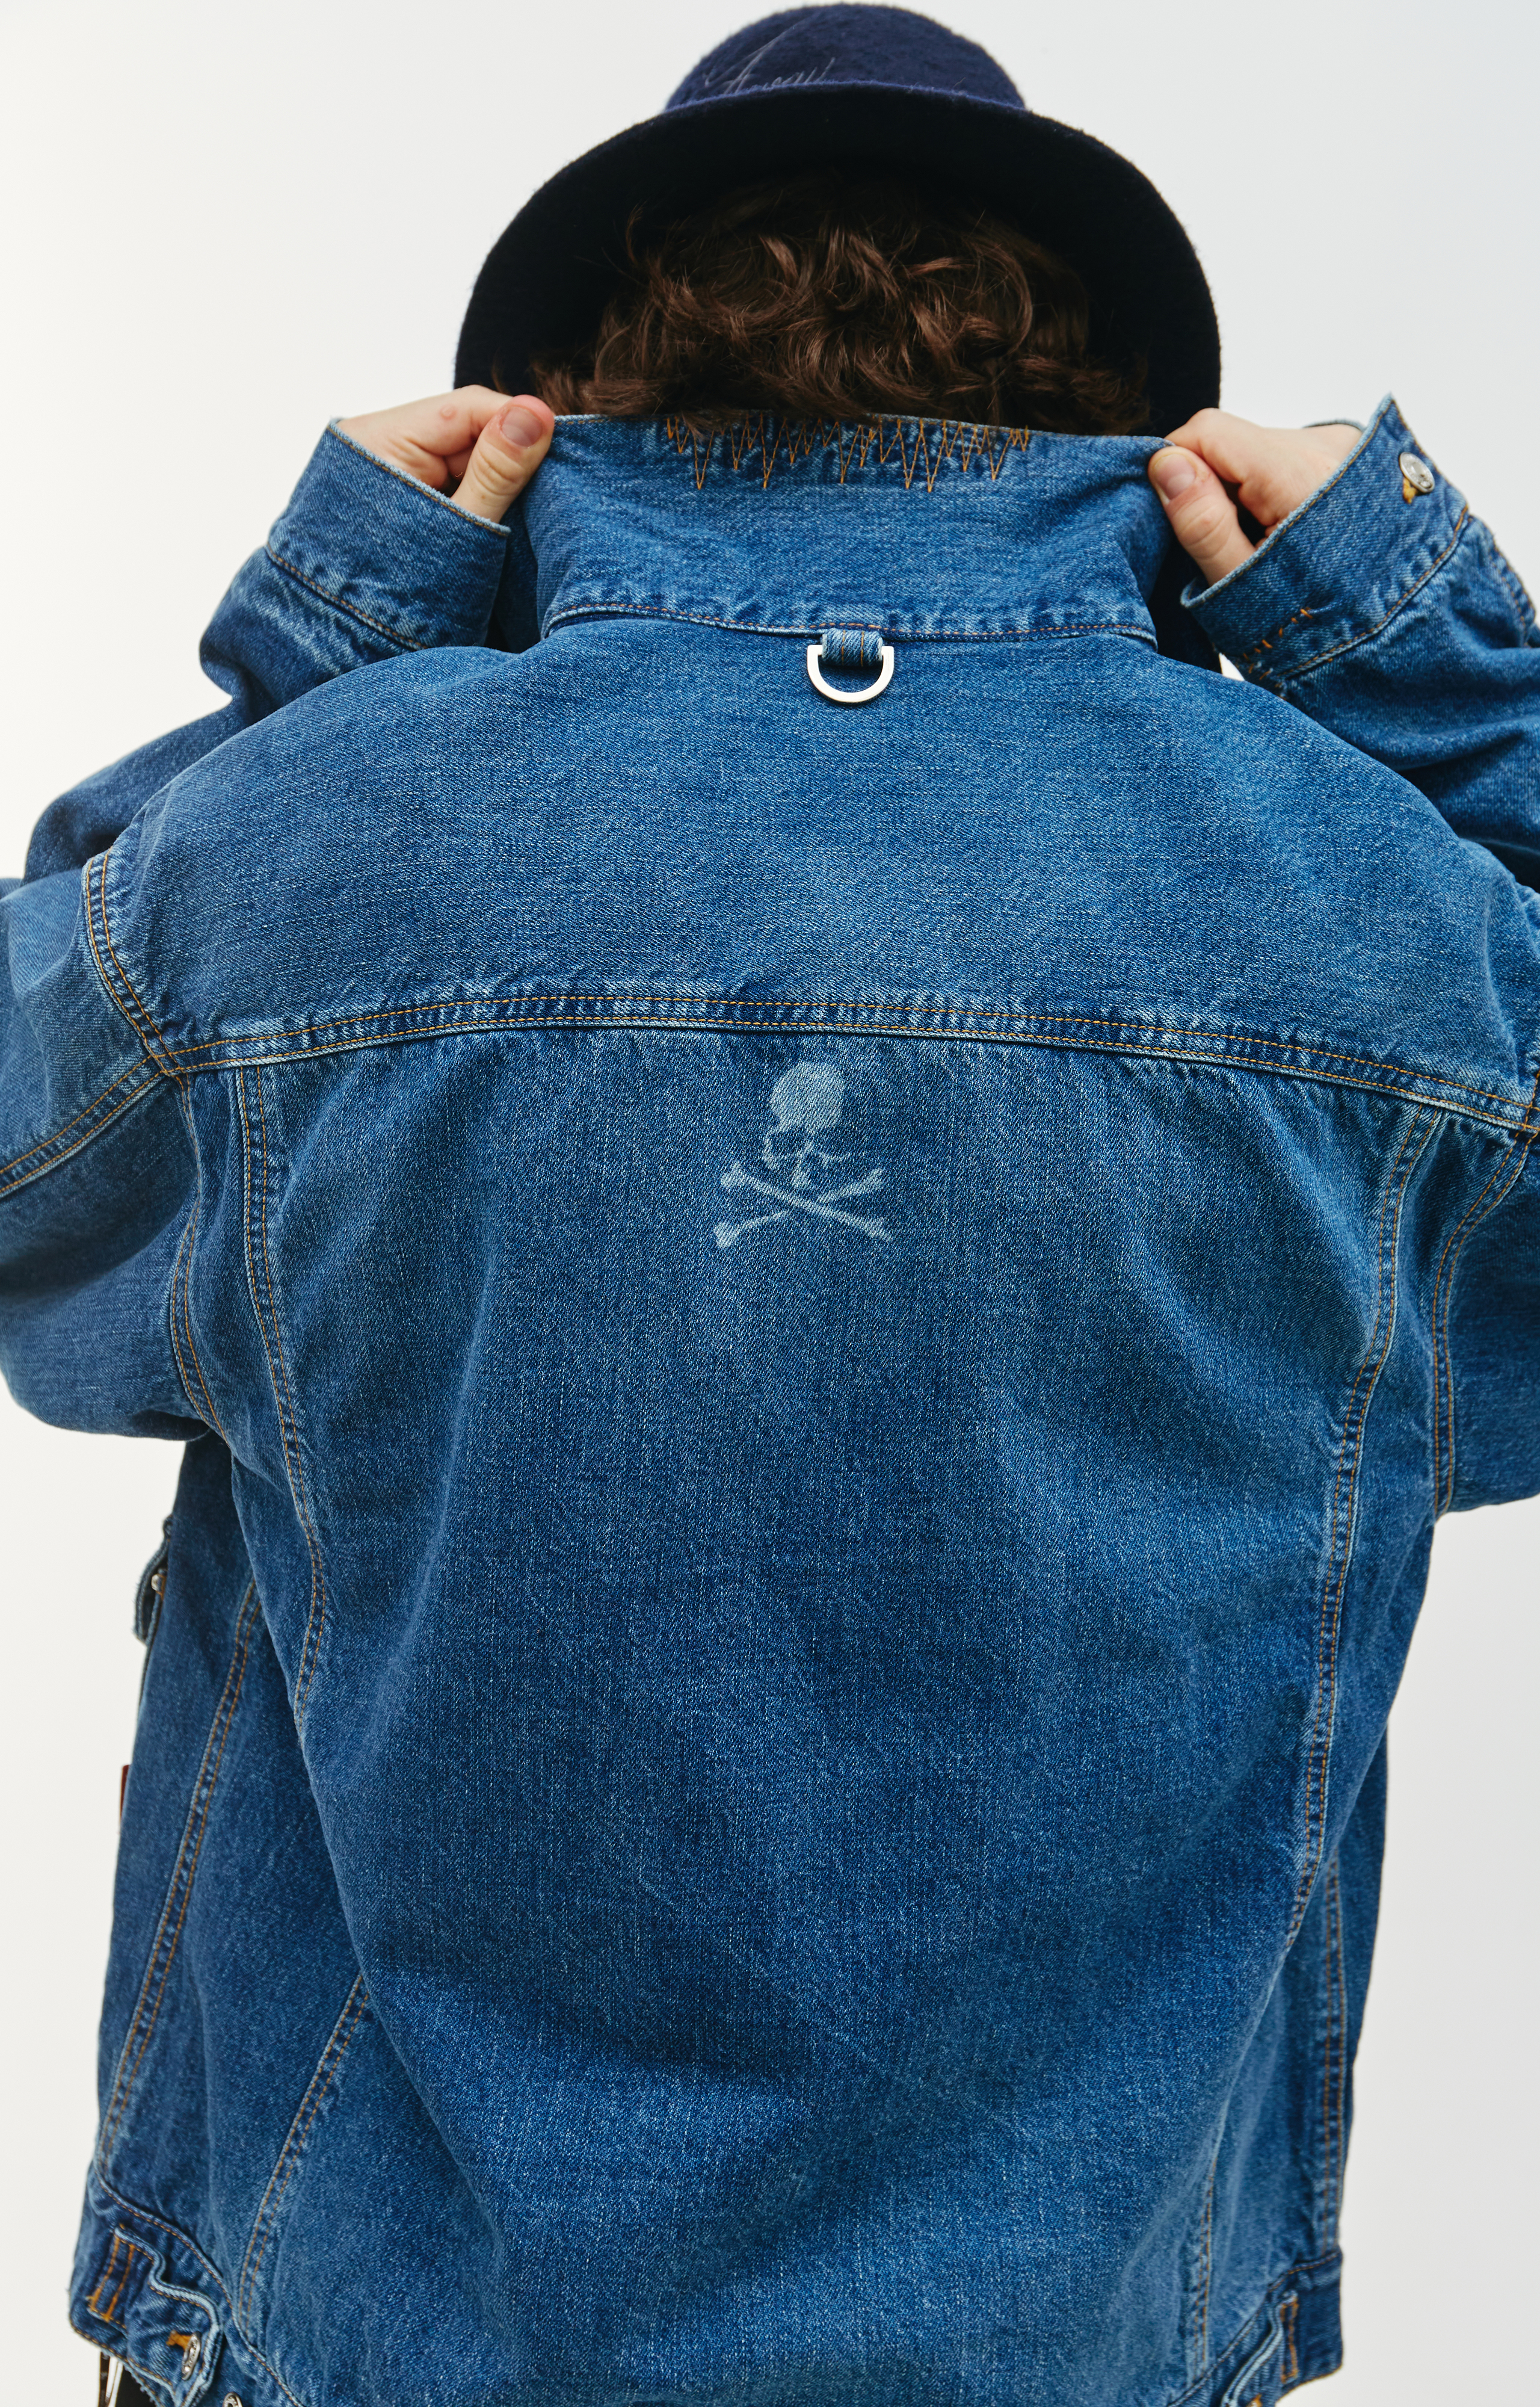 mastermind WORLD Monogram Denim Jeans Jacket Blue